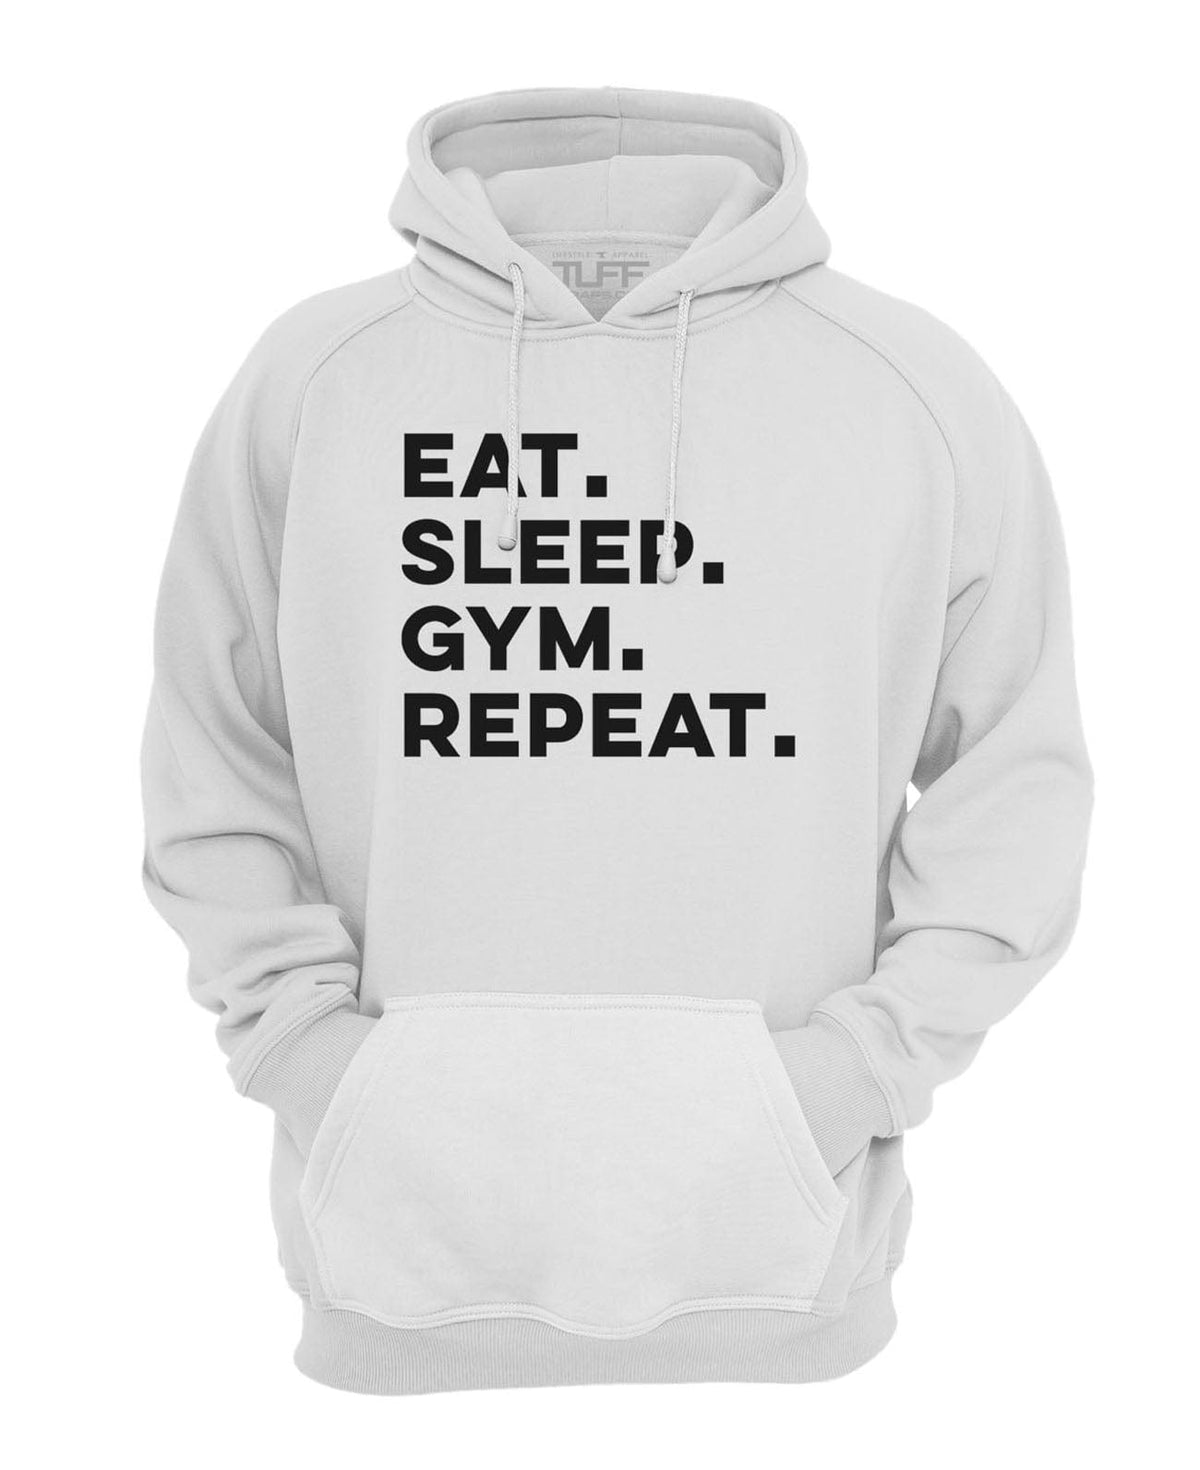 Eat. Sleep. Gym. Repeat. Hooded Sweatshirt XS / White TuffWraps.com